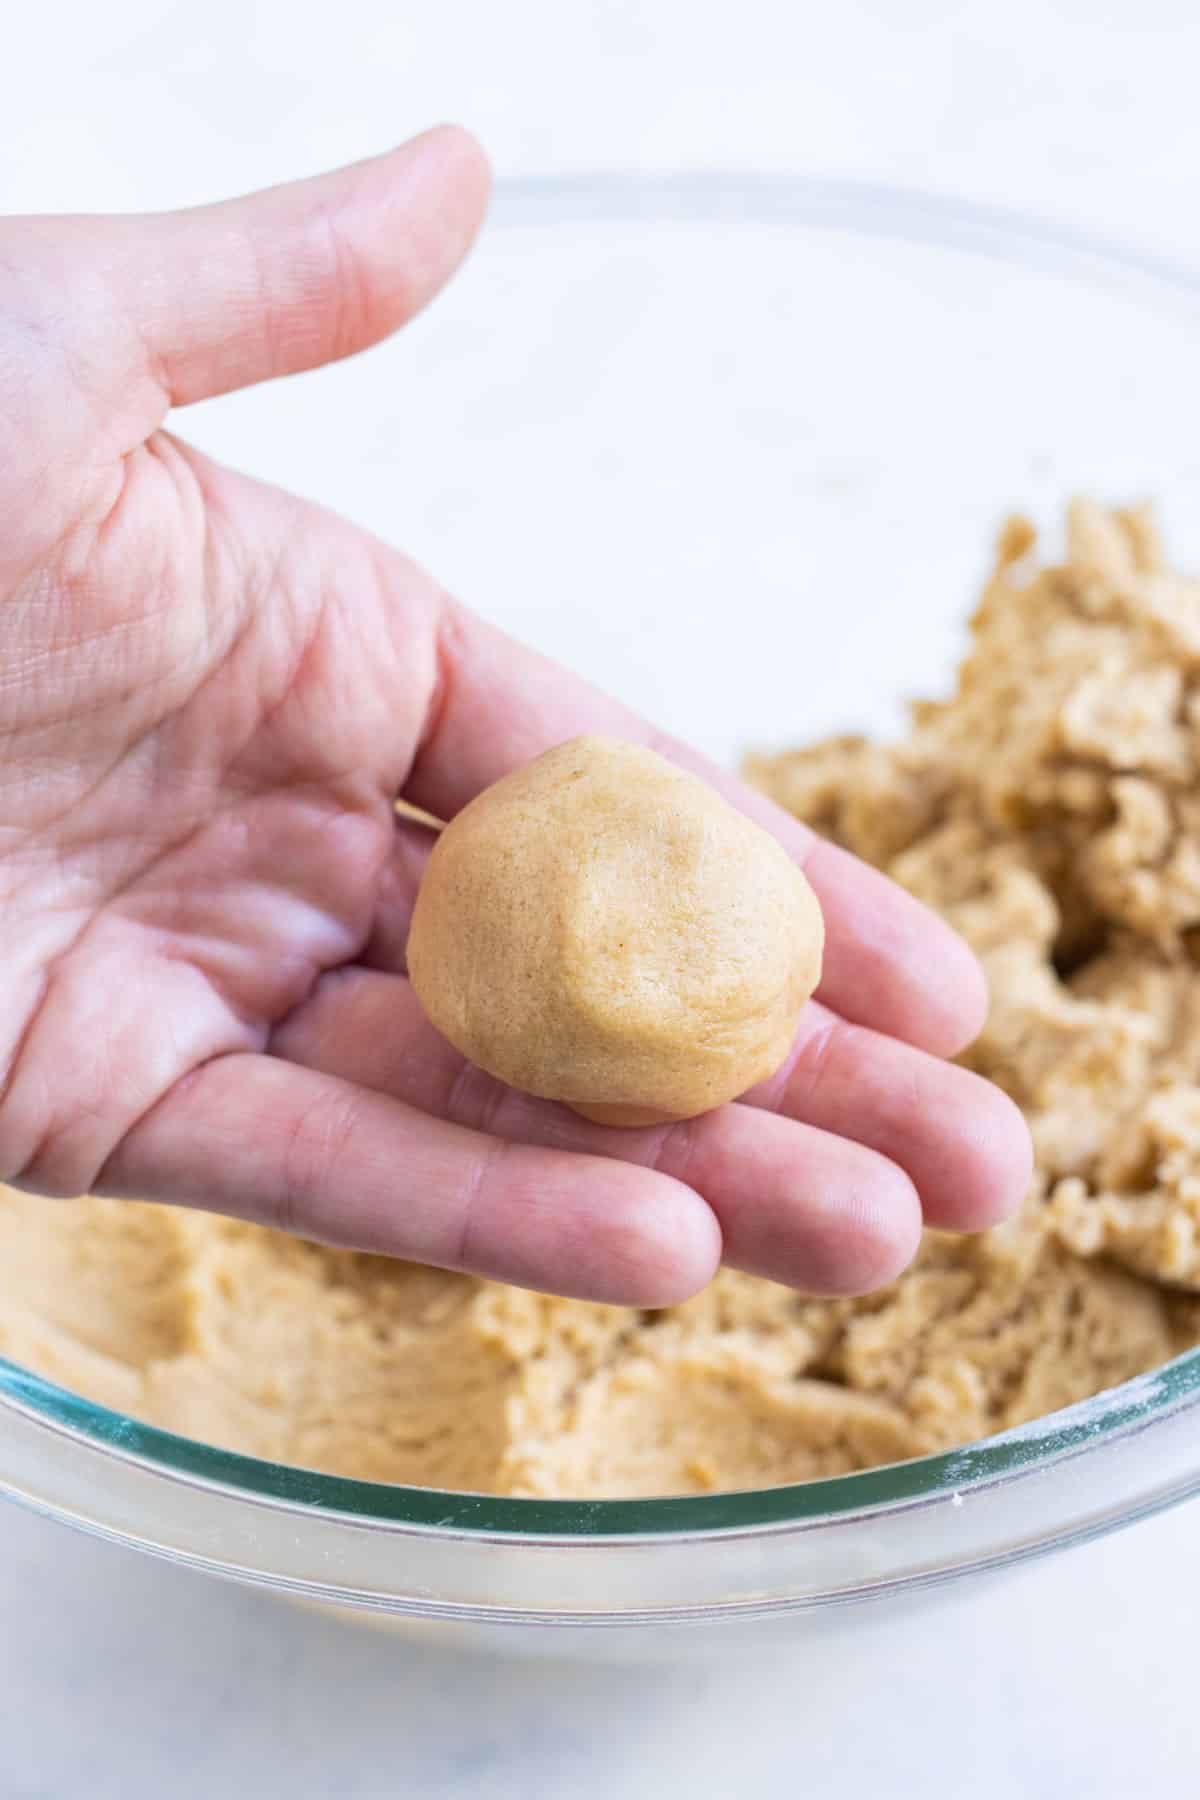 A hand rolls cookie dough into a ball.